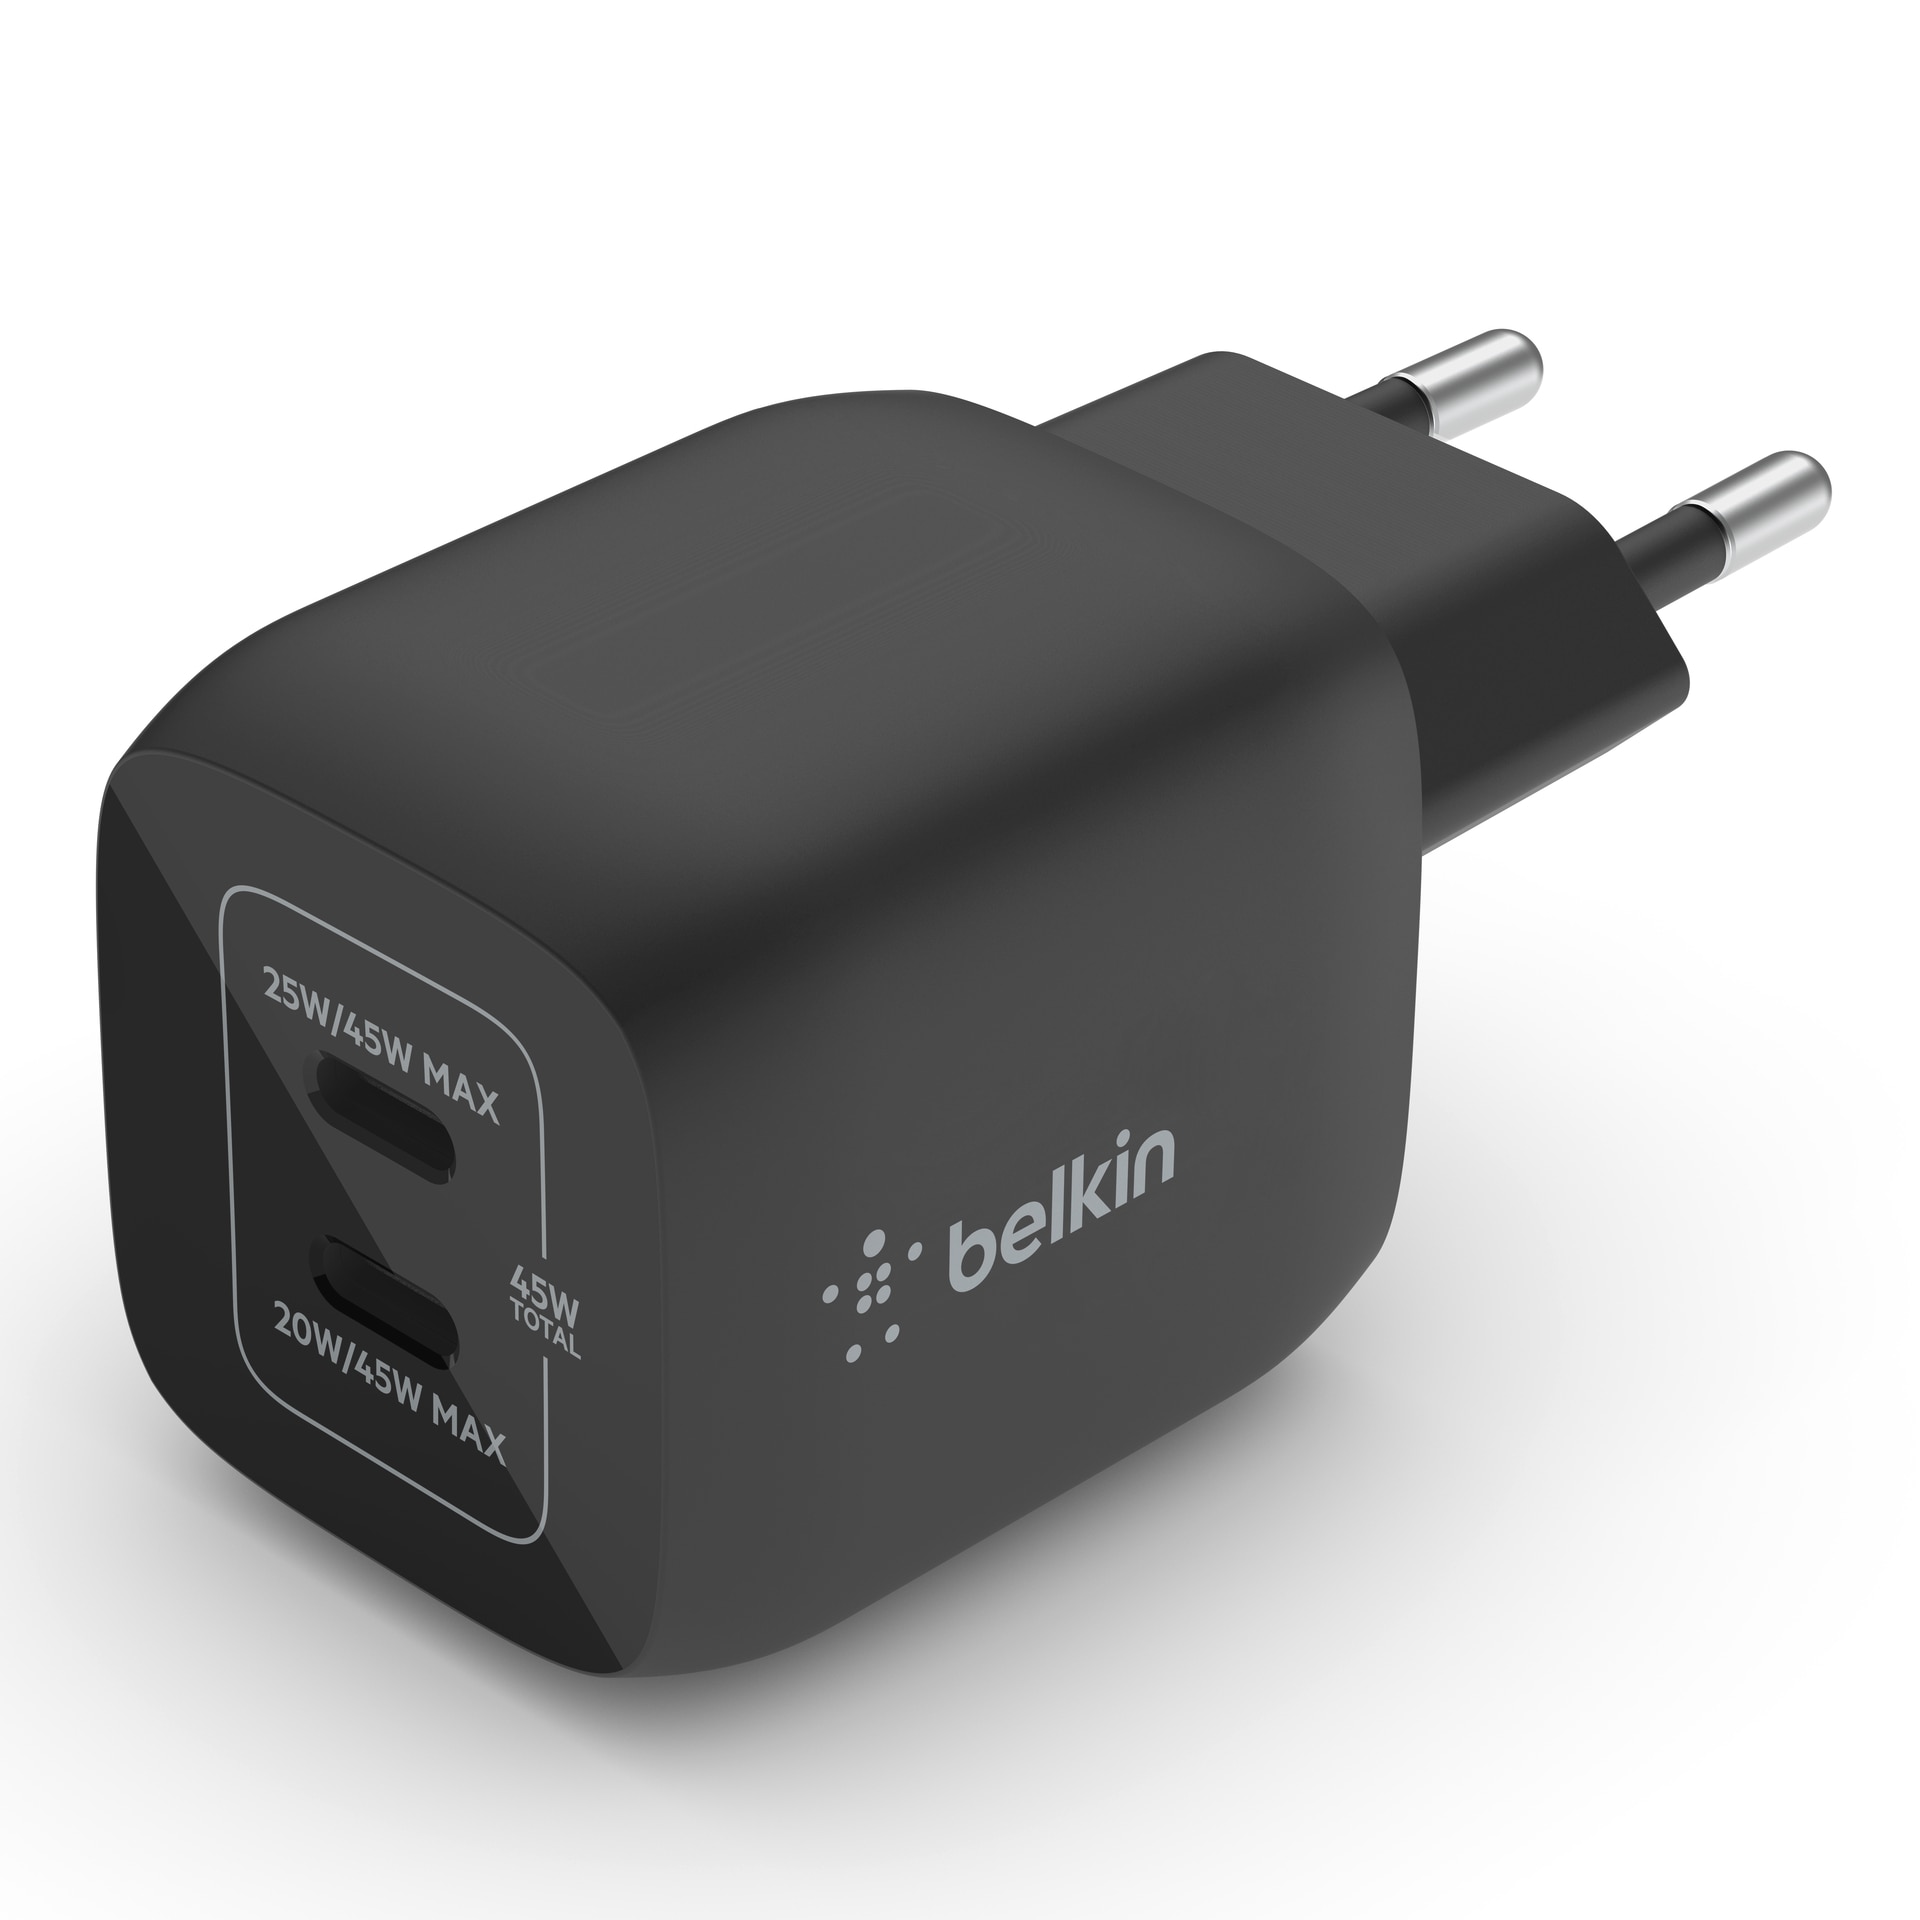 Belkin USB-Ladegerät »BoostCharge Pro 45 Watt Dual USB-C GaN Charger«, Ladegerät mit 2x USB-C Anschlüssen (Laptops, Tablets, Smartphones)